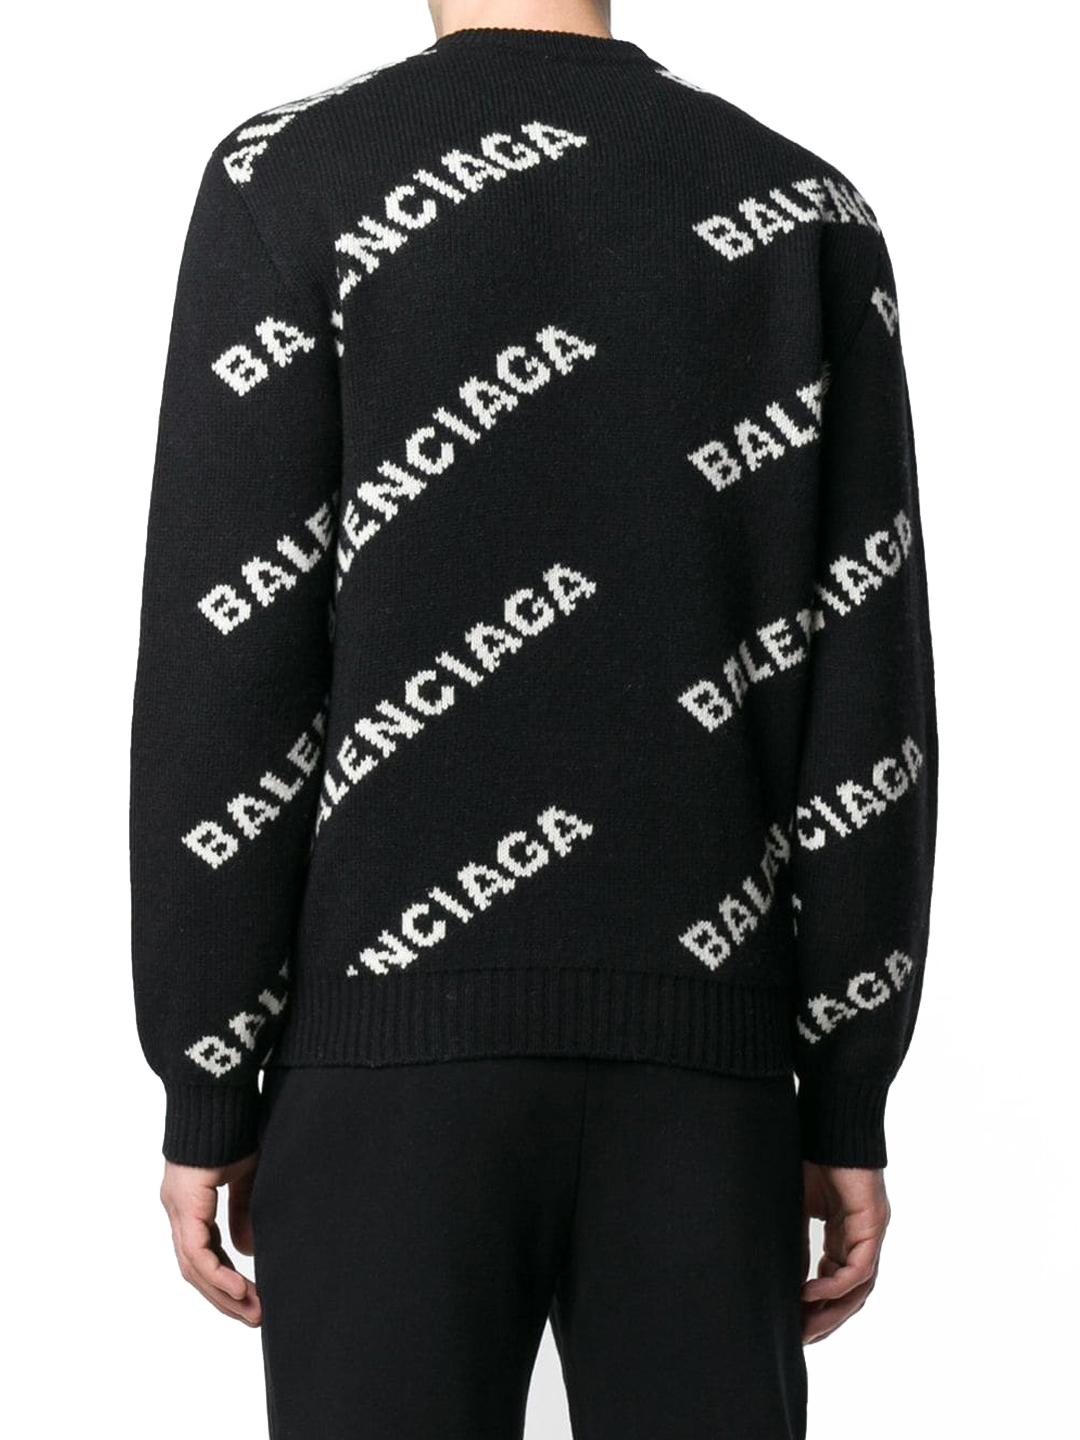 Balenciaga Wool Logo Sweater in Black for Men - Lyst